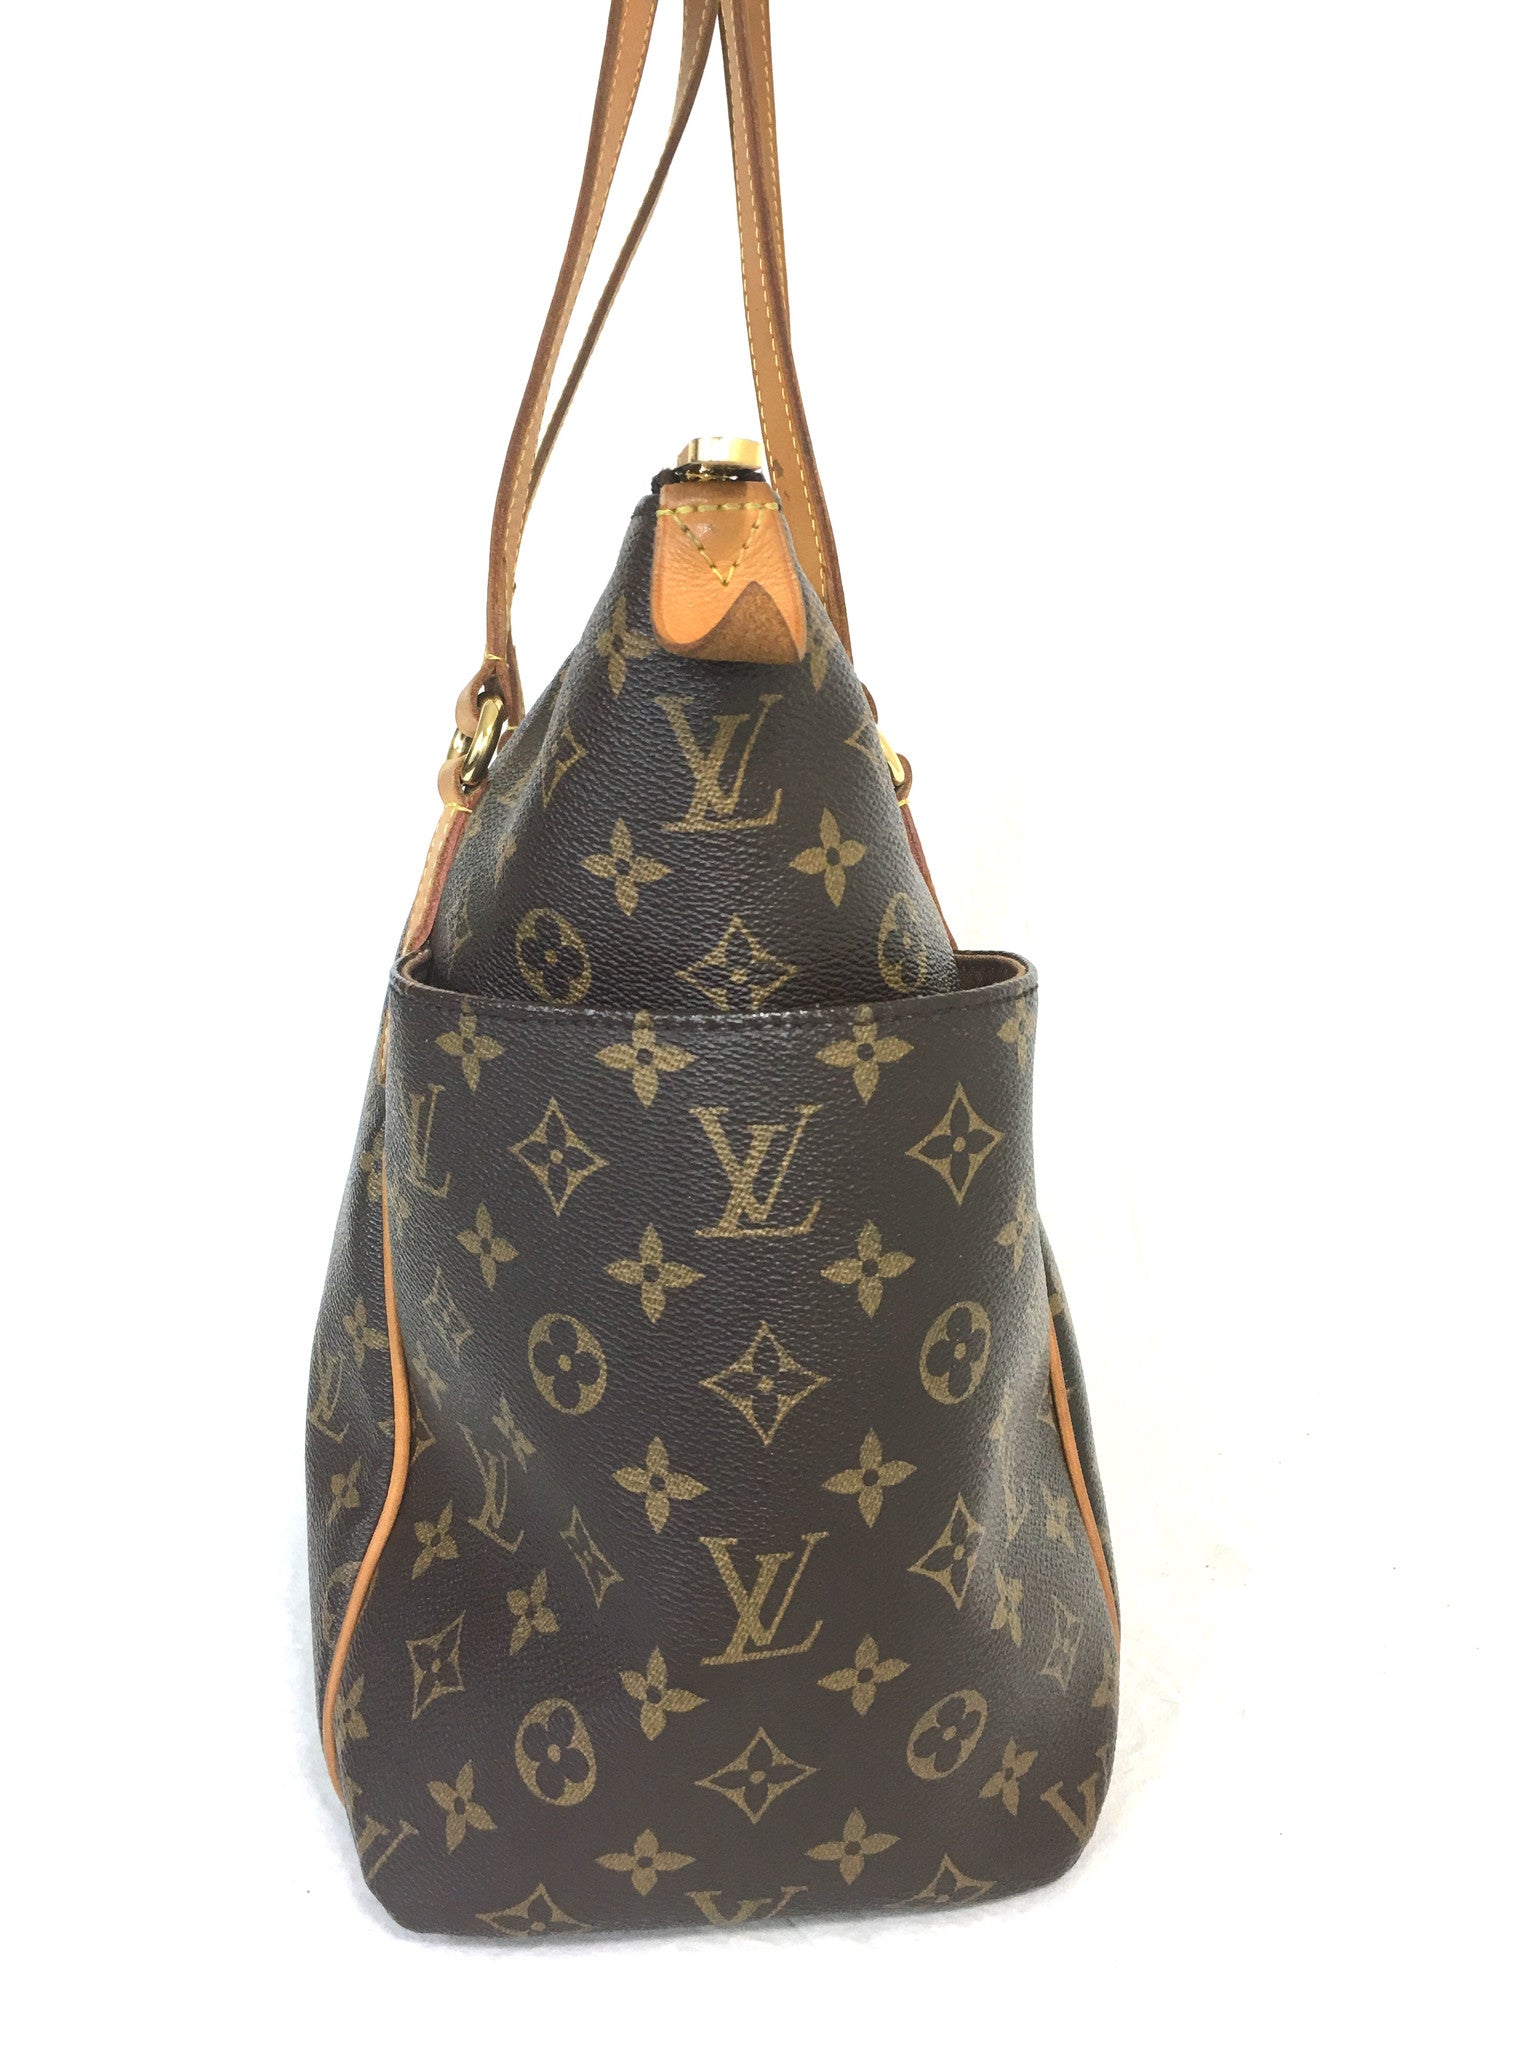 My Entire LV Louis Vuitton Bag & Purse Collection 2021 😍 BEST & WORST 